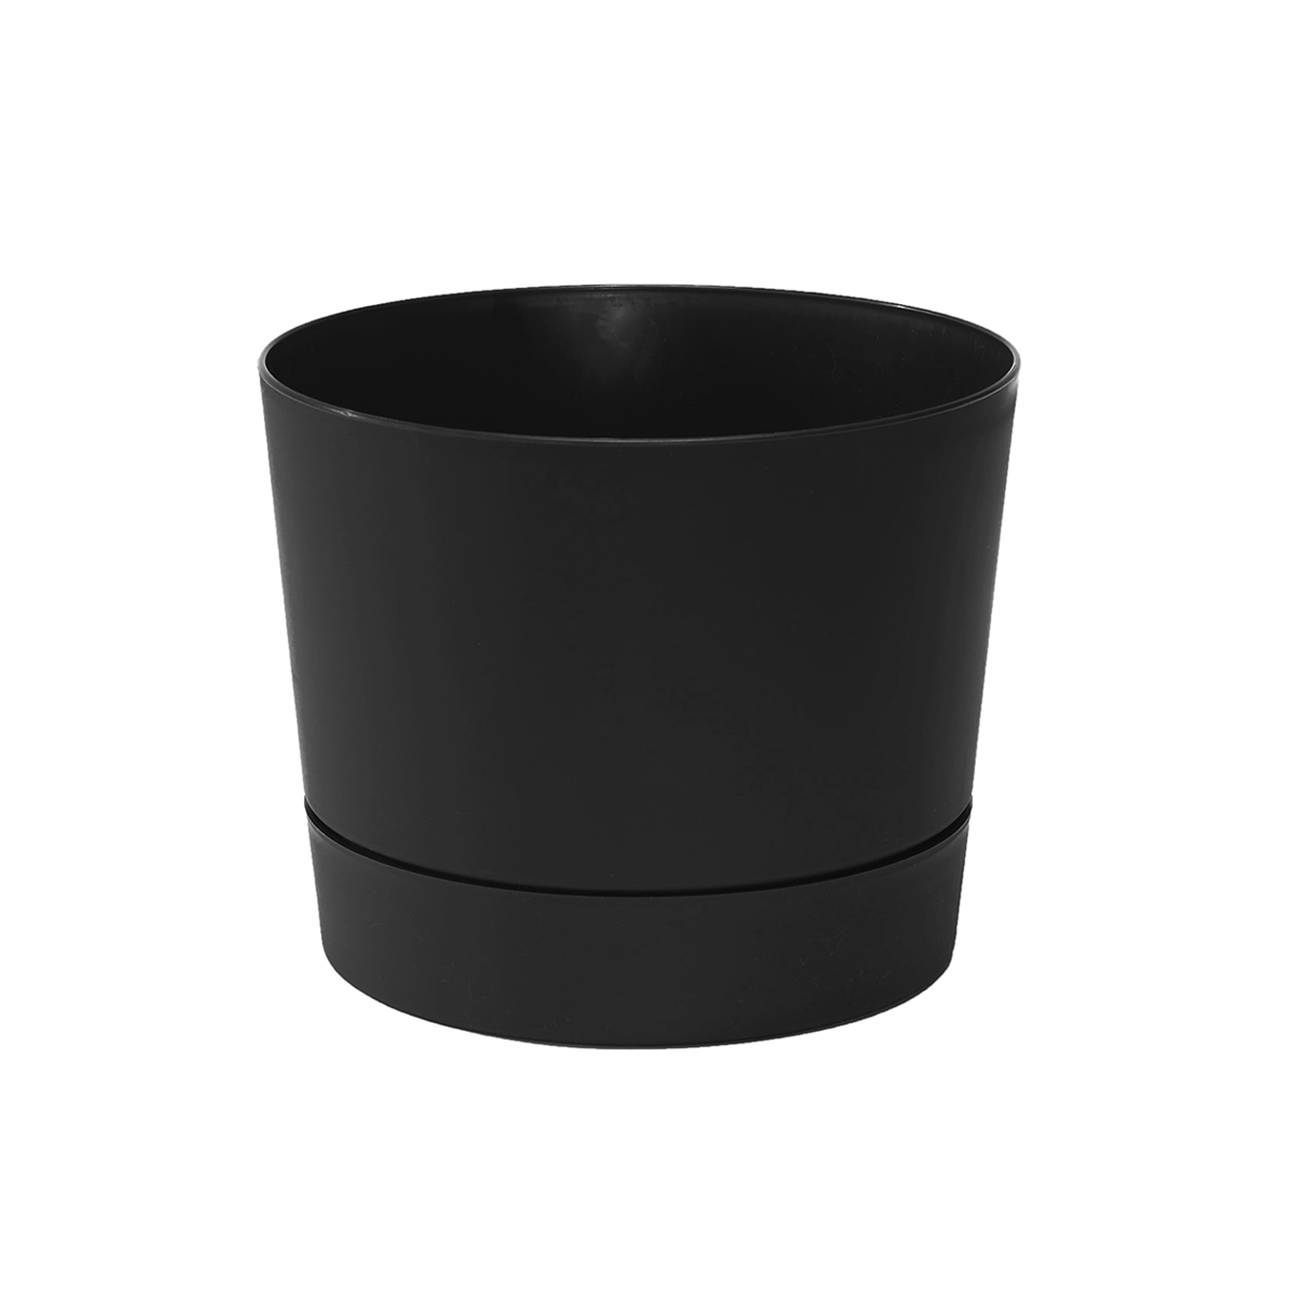 Black Majestic low profile cylinder pot